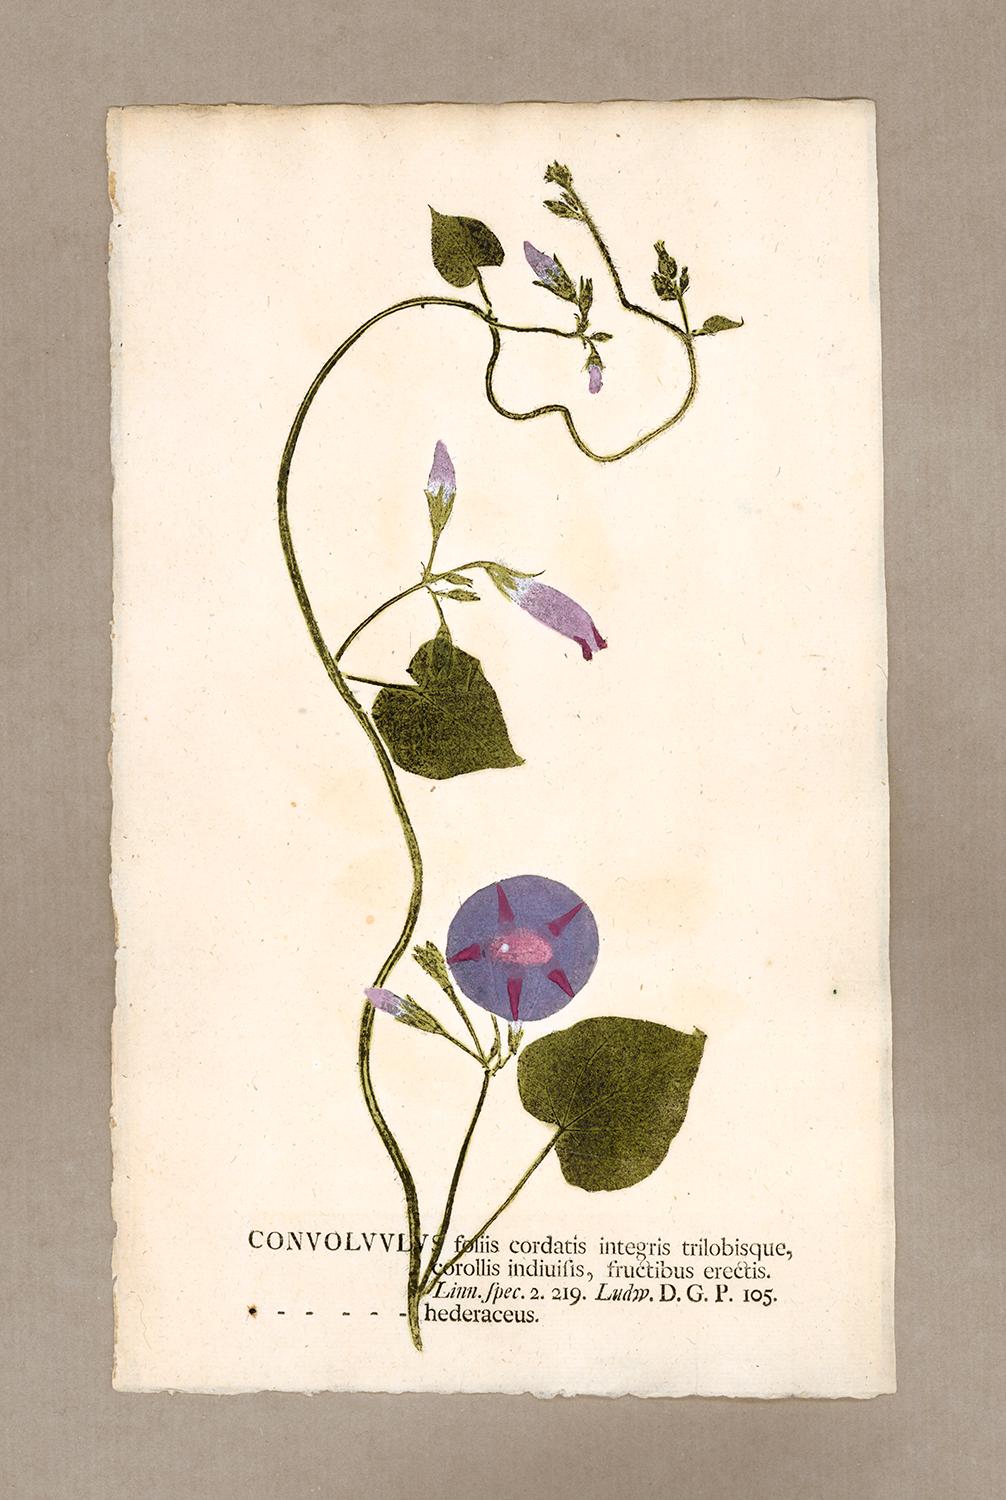 Johann Hieronymus Kniphof  Black and White Photograph - Botanica in Originali, seu Herbarium Vivum - "Nature Printed Plants" -9